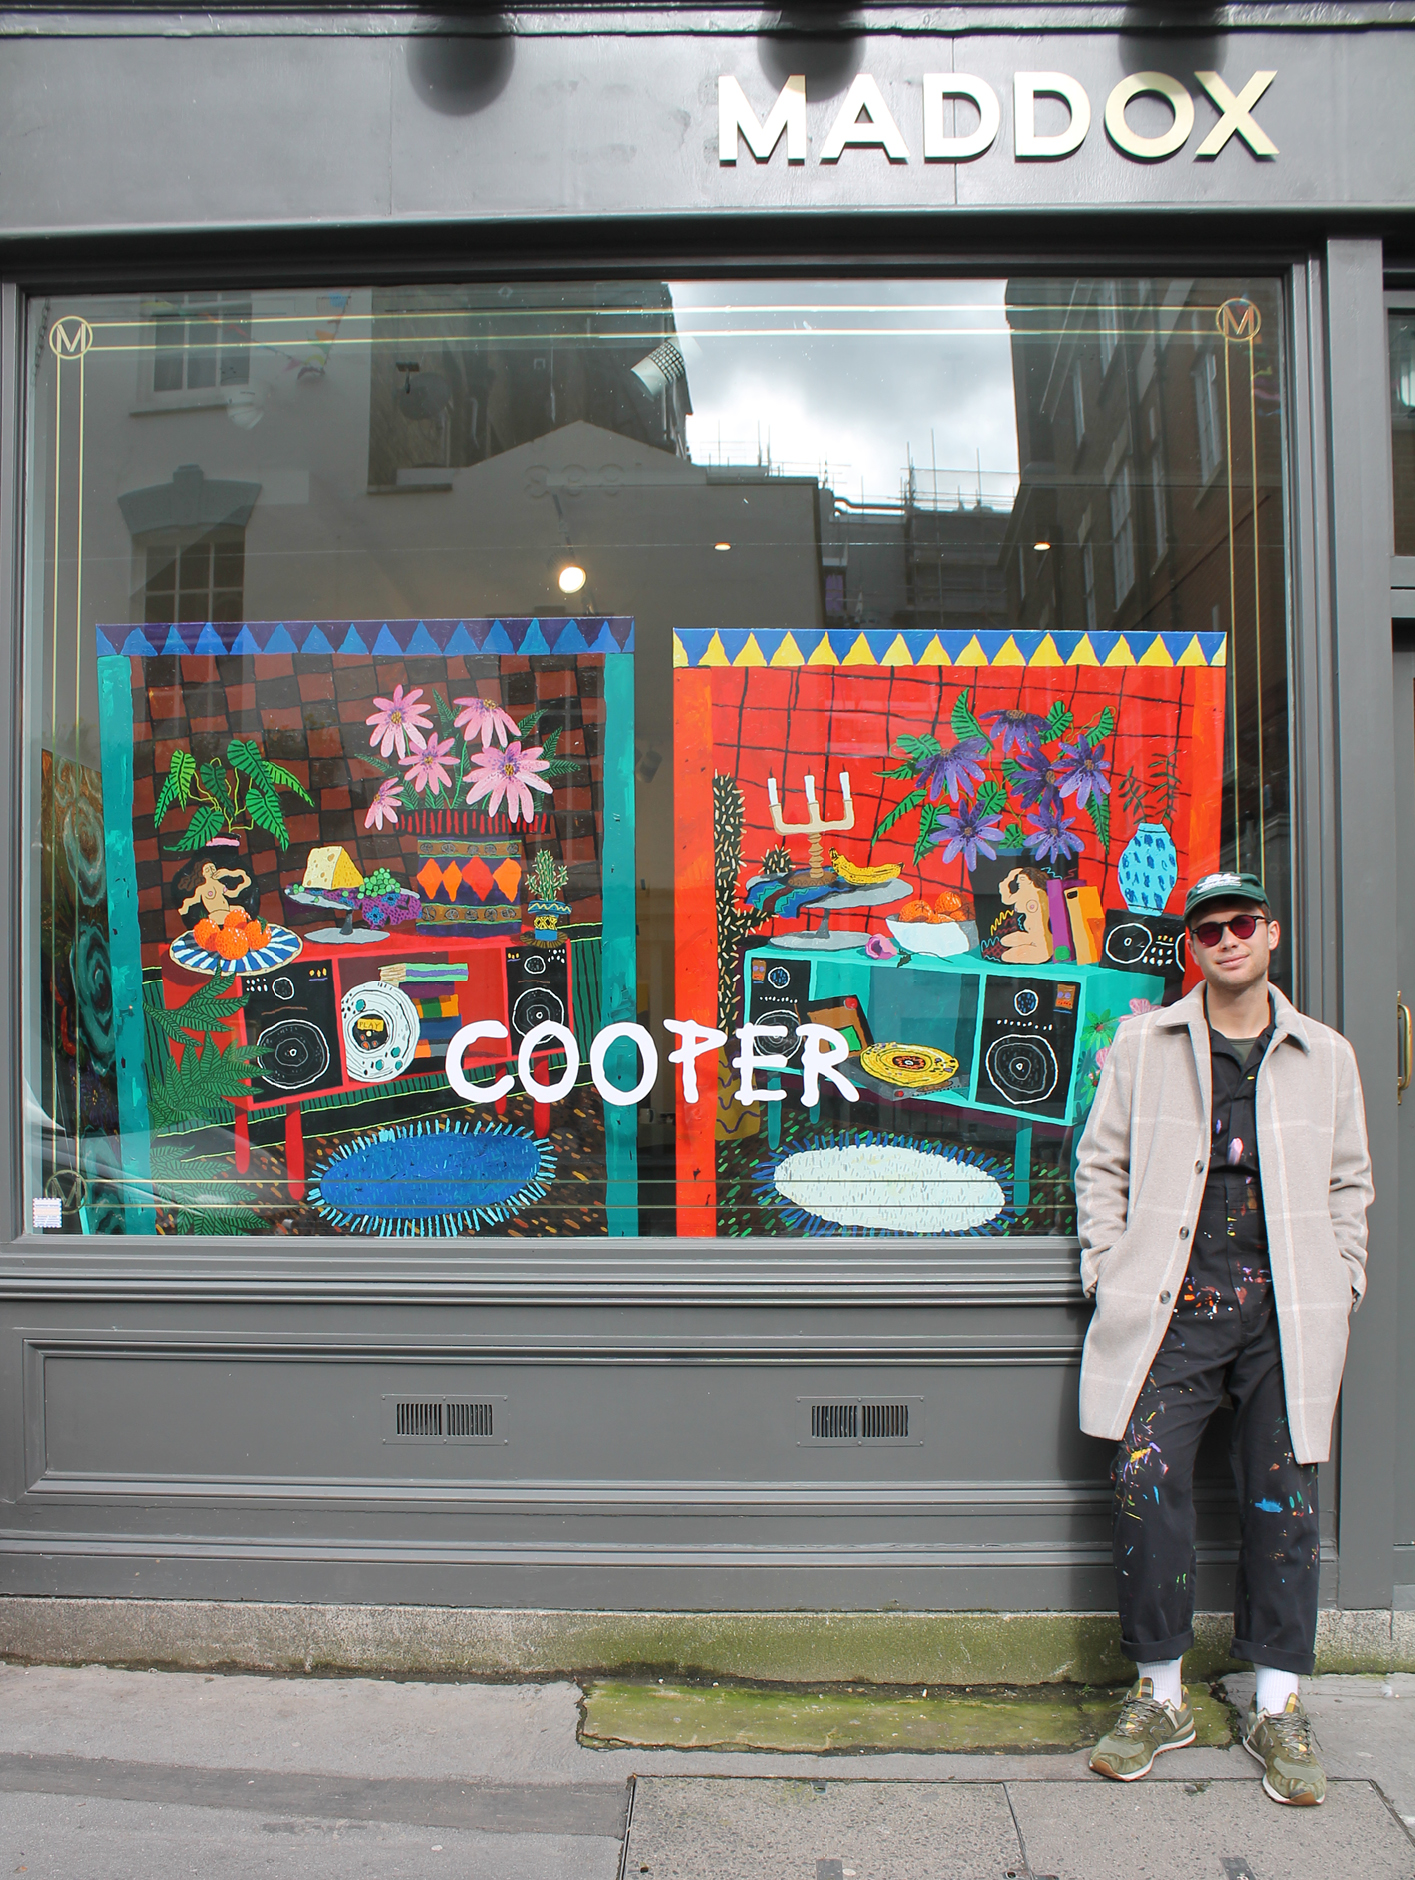 Cooper's residency in Mayfair’s Maddox Shepherd Market